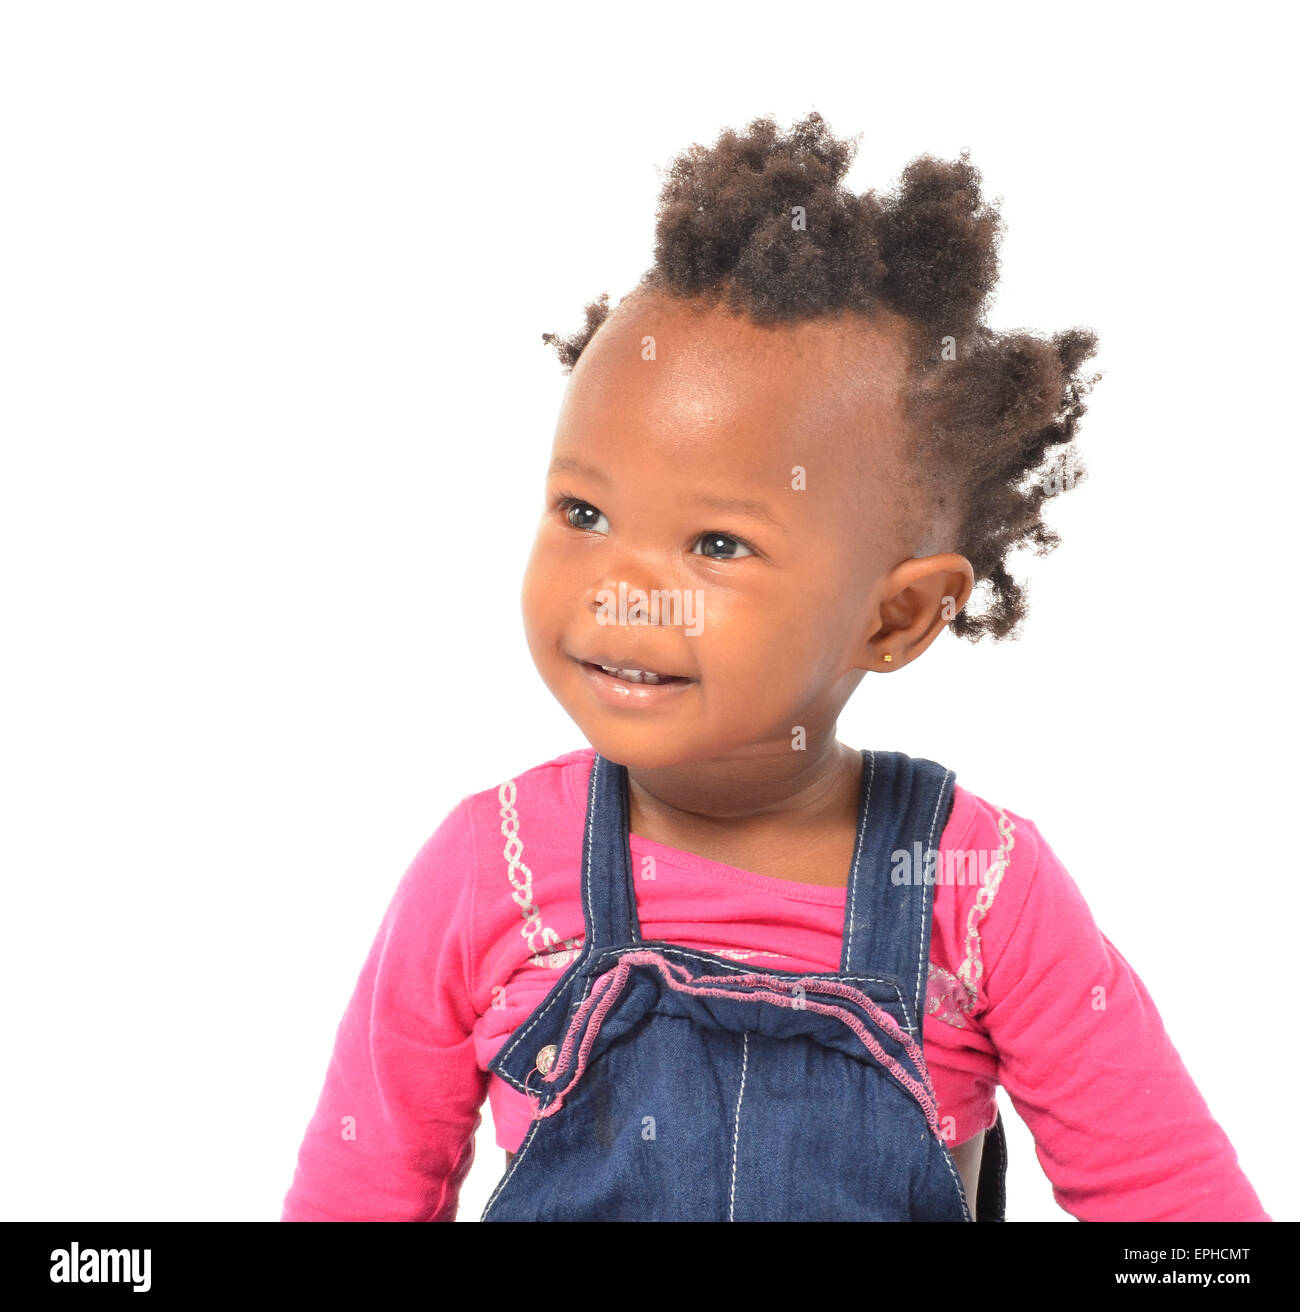 Young African baby girl having fun in photo studio Stock Photo